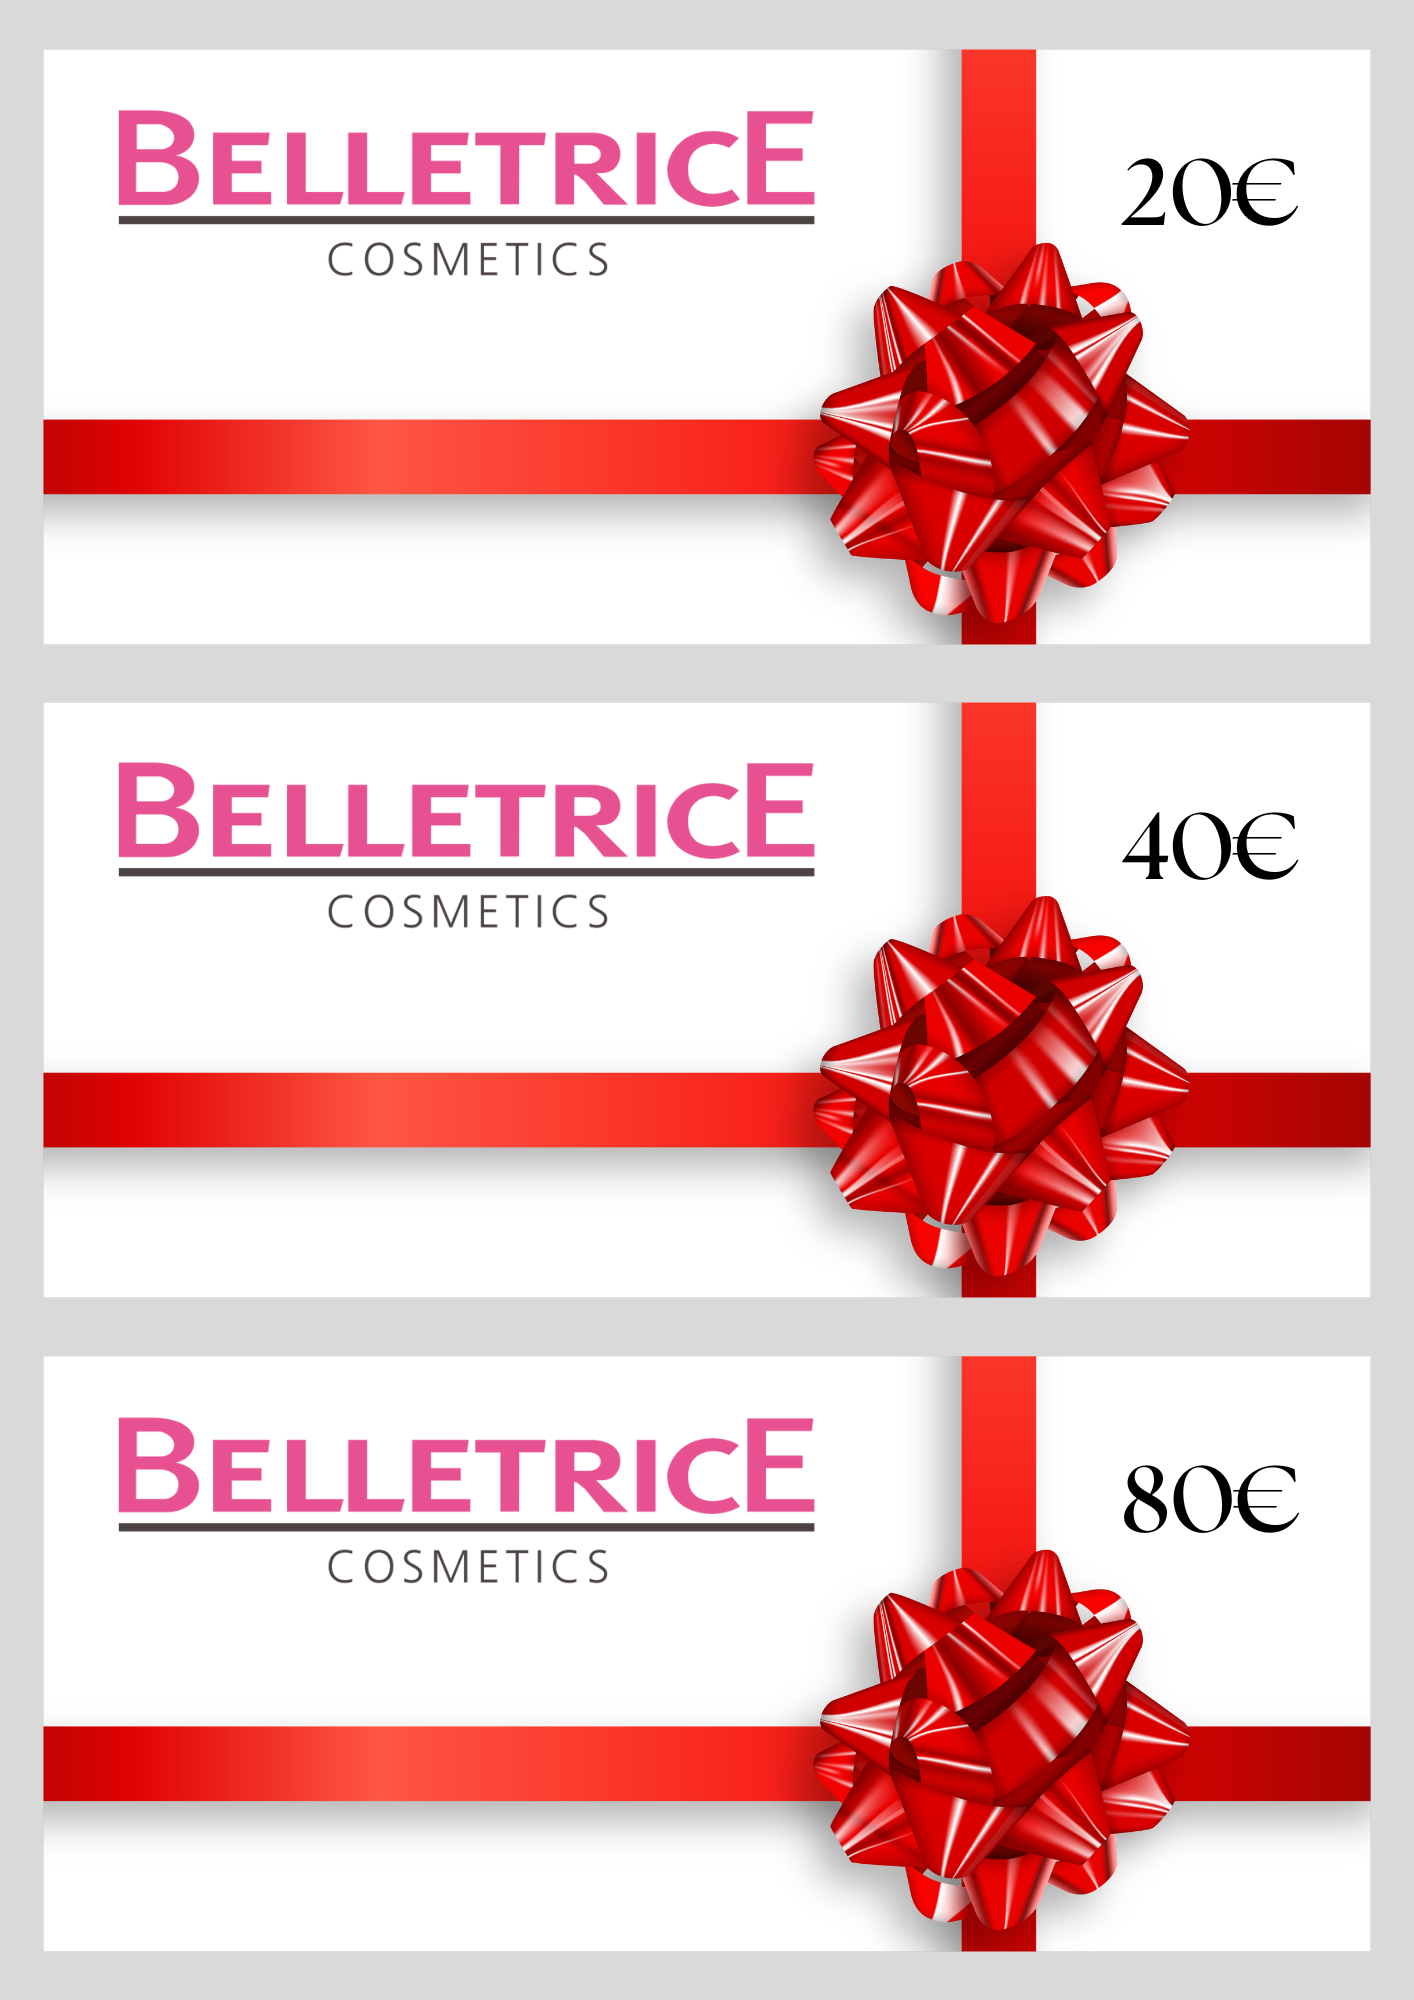 Belletrice Cosmetics gift voucher